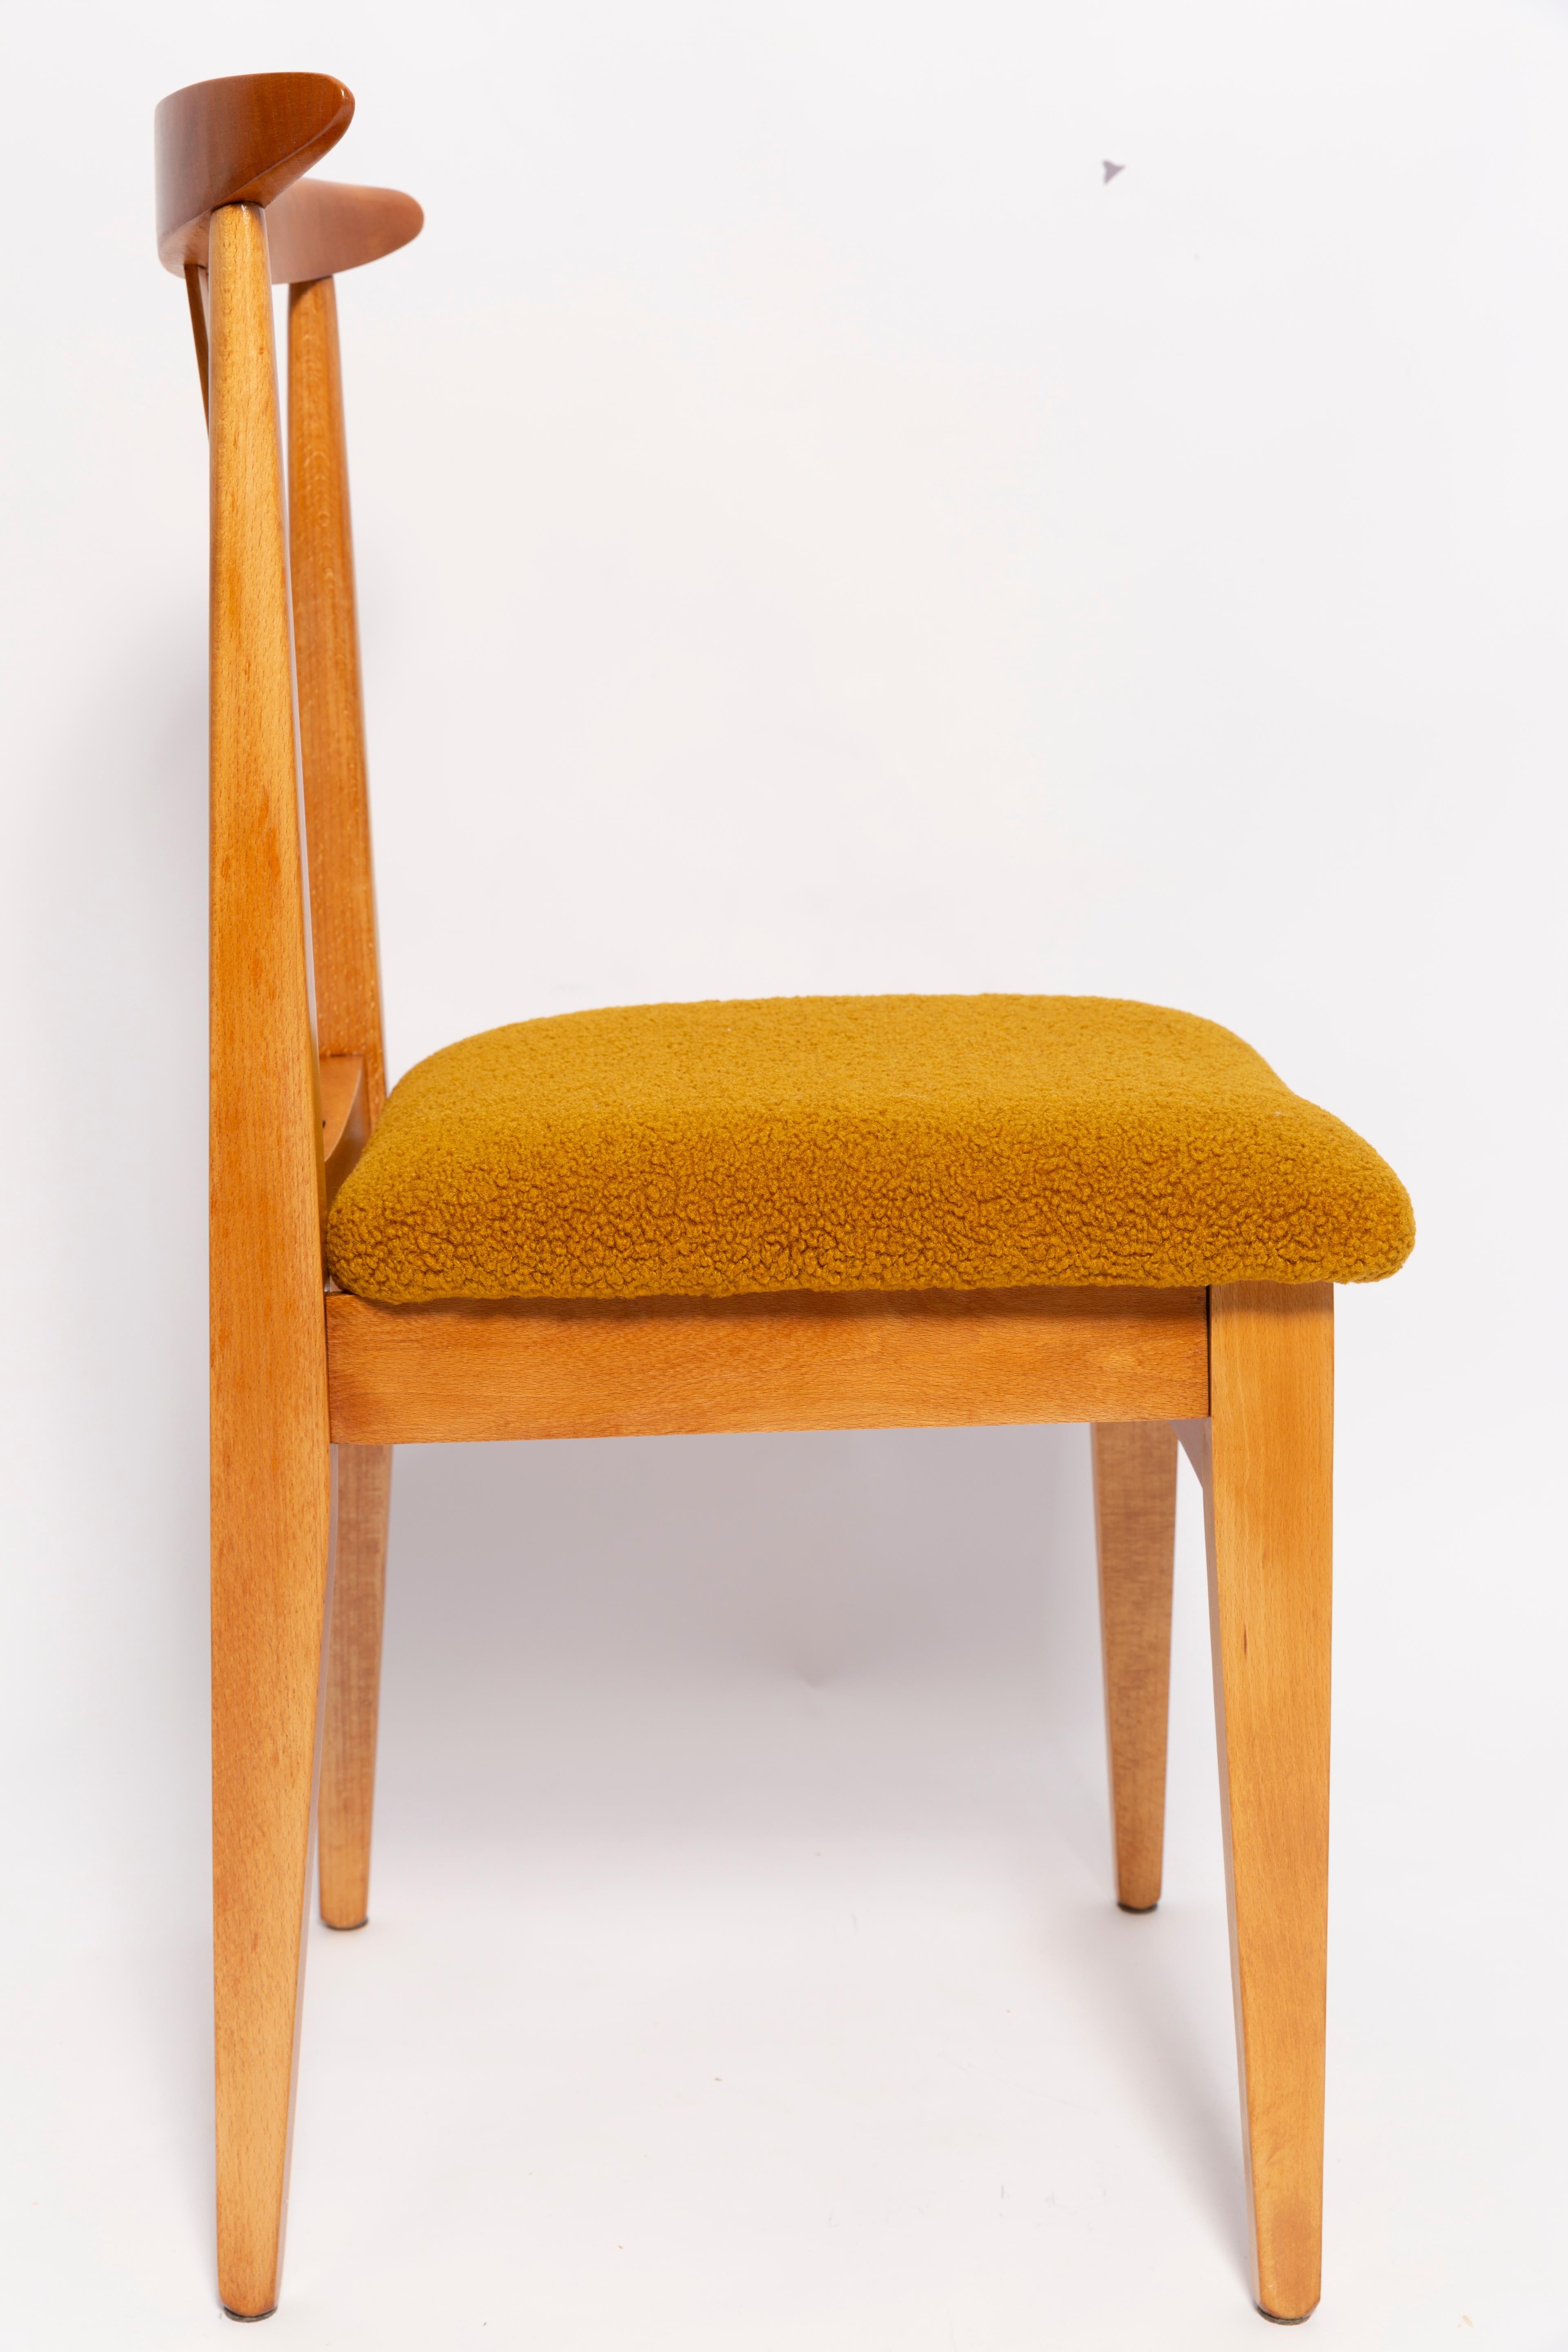 Polish Mid-Century Ochre Boucle Chair, Light Wood, M. Zielinski, Europe 1960s For Sale